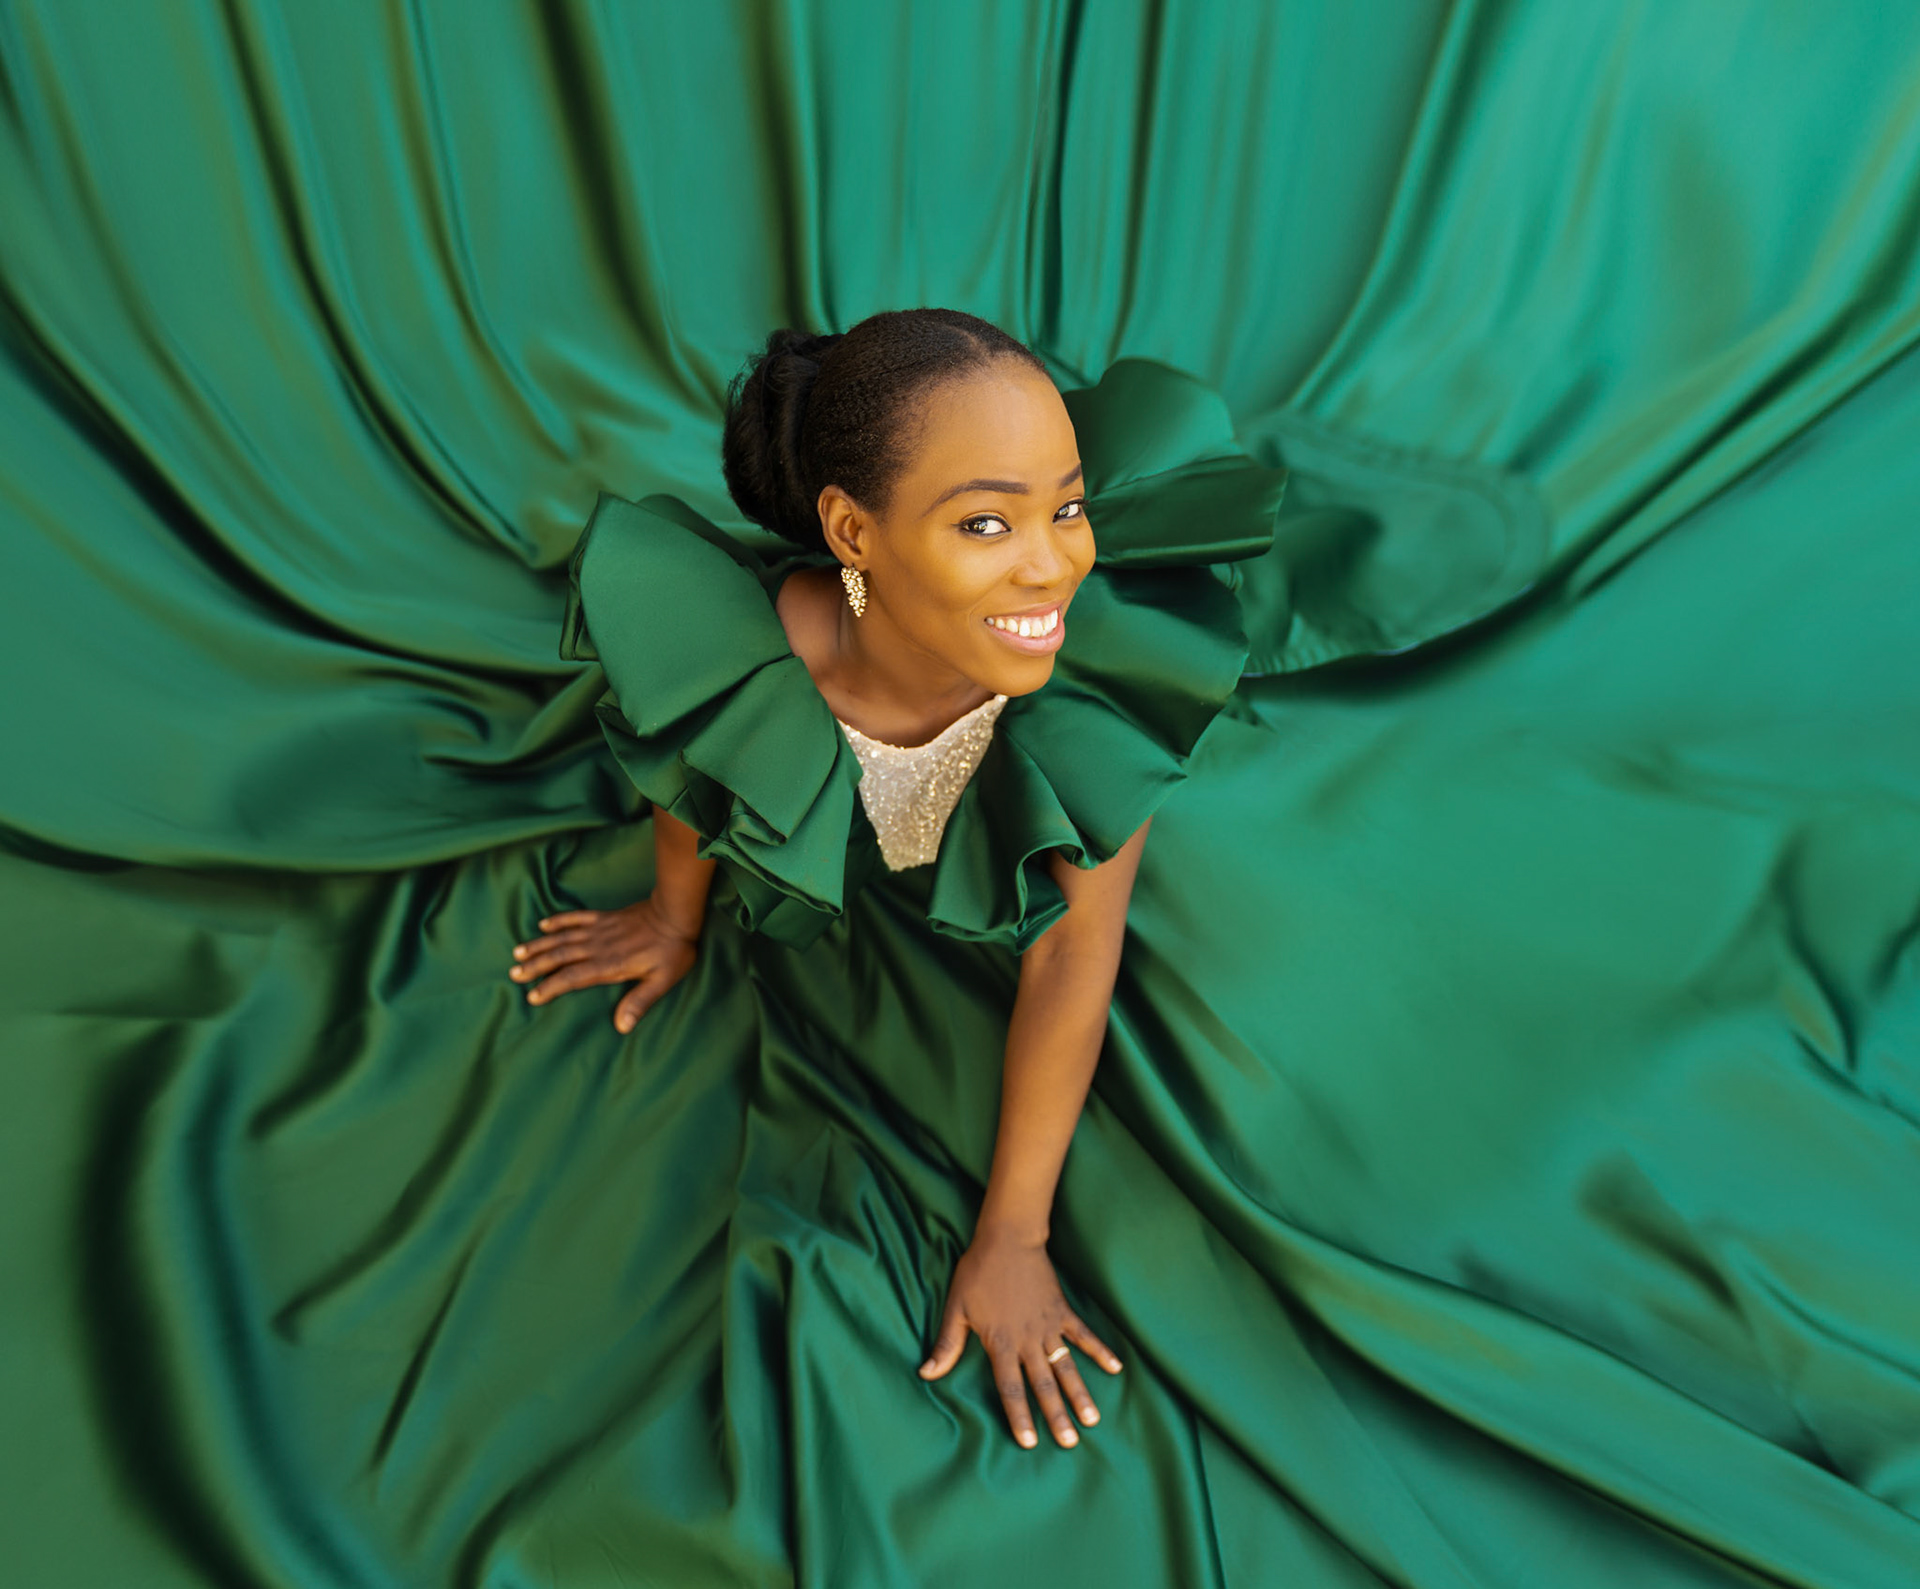 Top View of Woman in Flowing Green Dress by Ivan Cherkashin